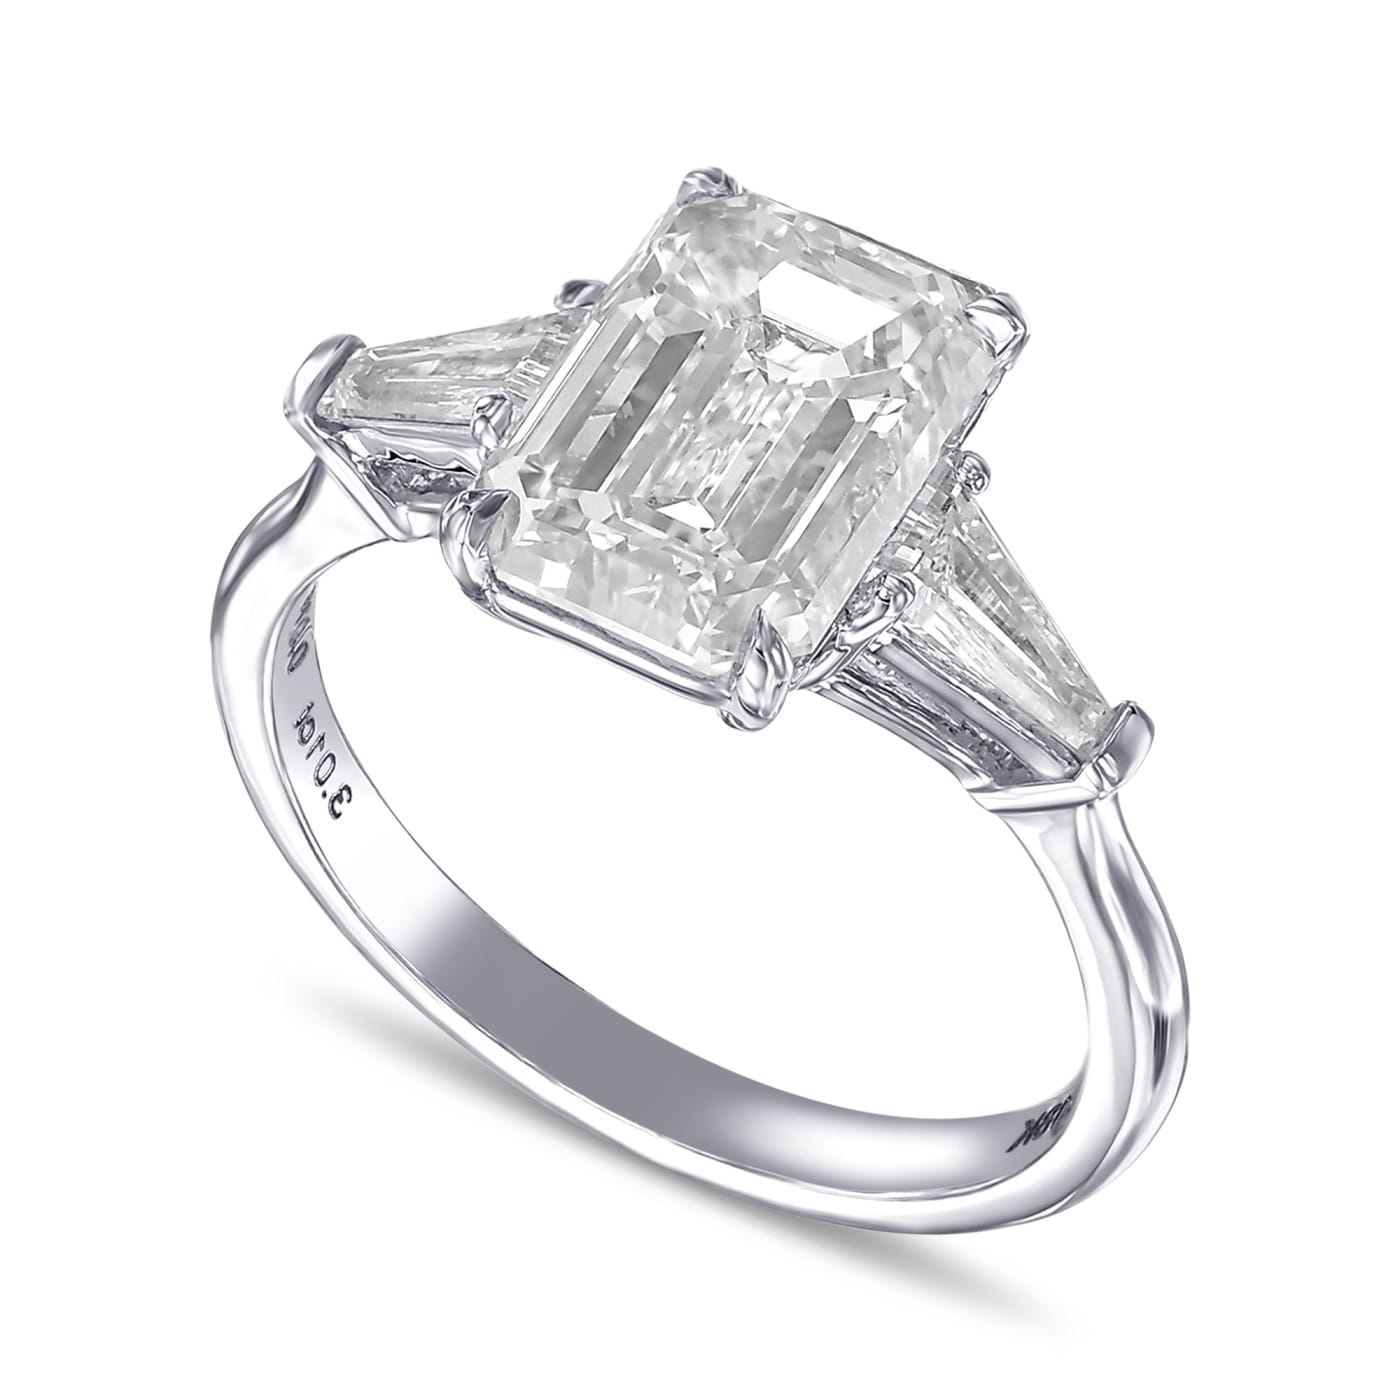 25 Expensive Diamond Engagement Rings | White gold diamond wedding rings,  Beautiful engagement rings, Eternity band diamond